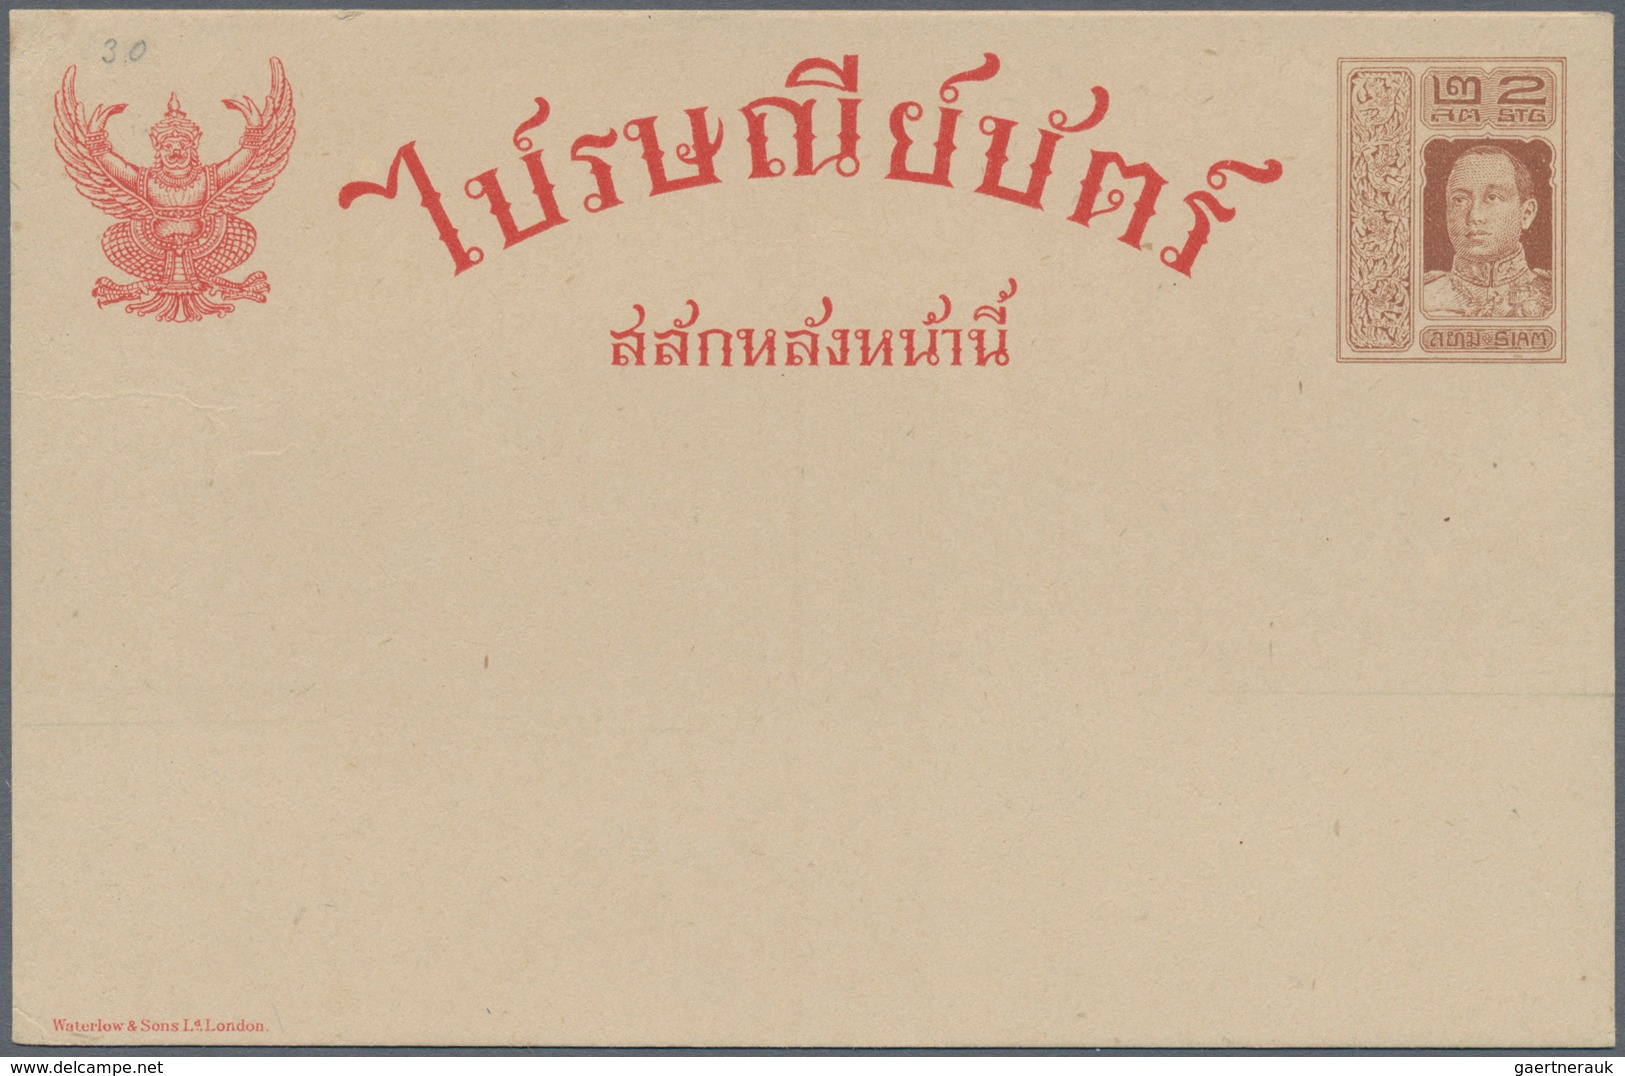 Thailand - Ganzsachen: 1912 (ca.), King Vaijravudh stationer card 2 S brown., 3 S. green resp. forei